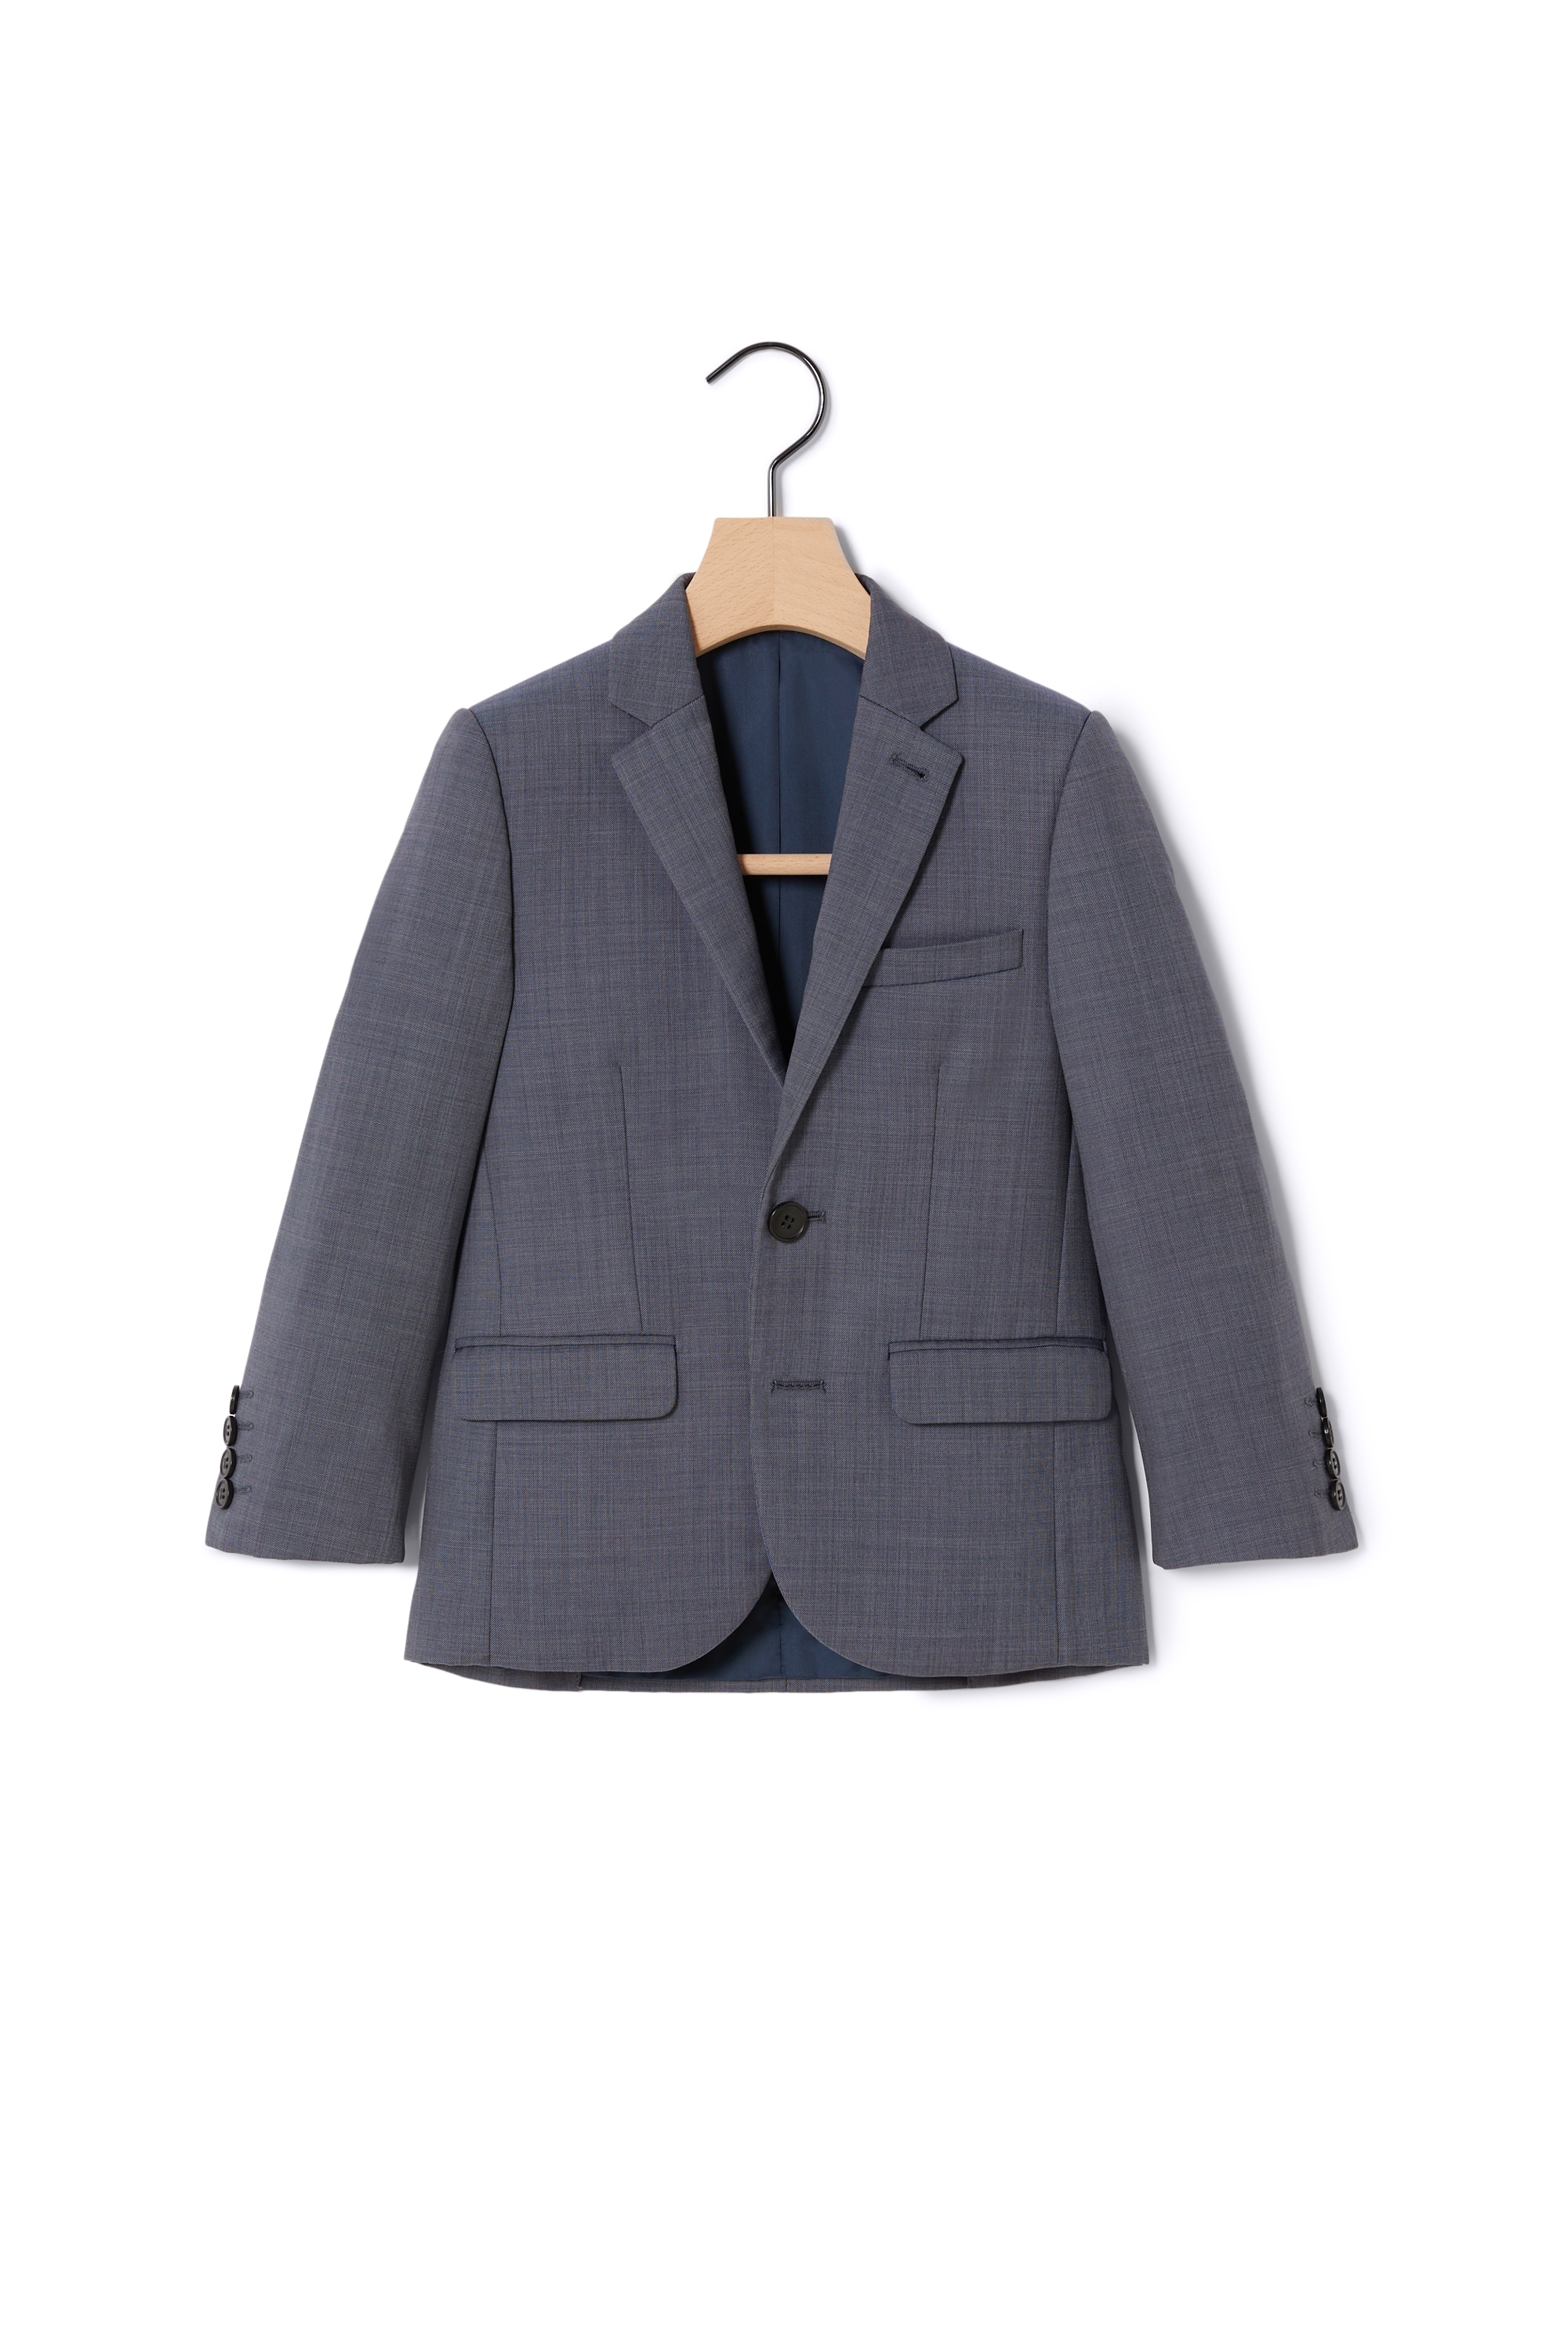 Boys Grey Twill Jacket | Buy Online at Moss